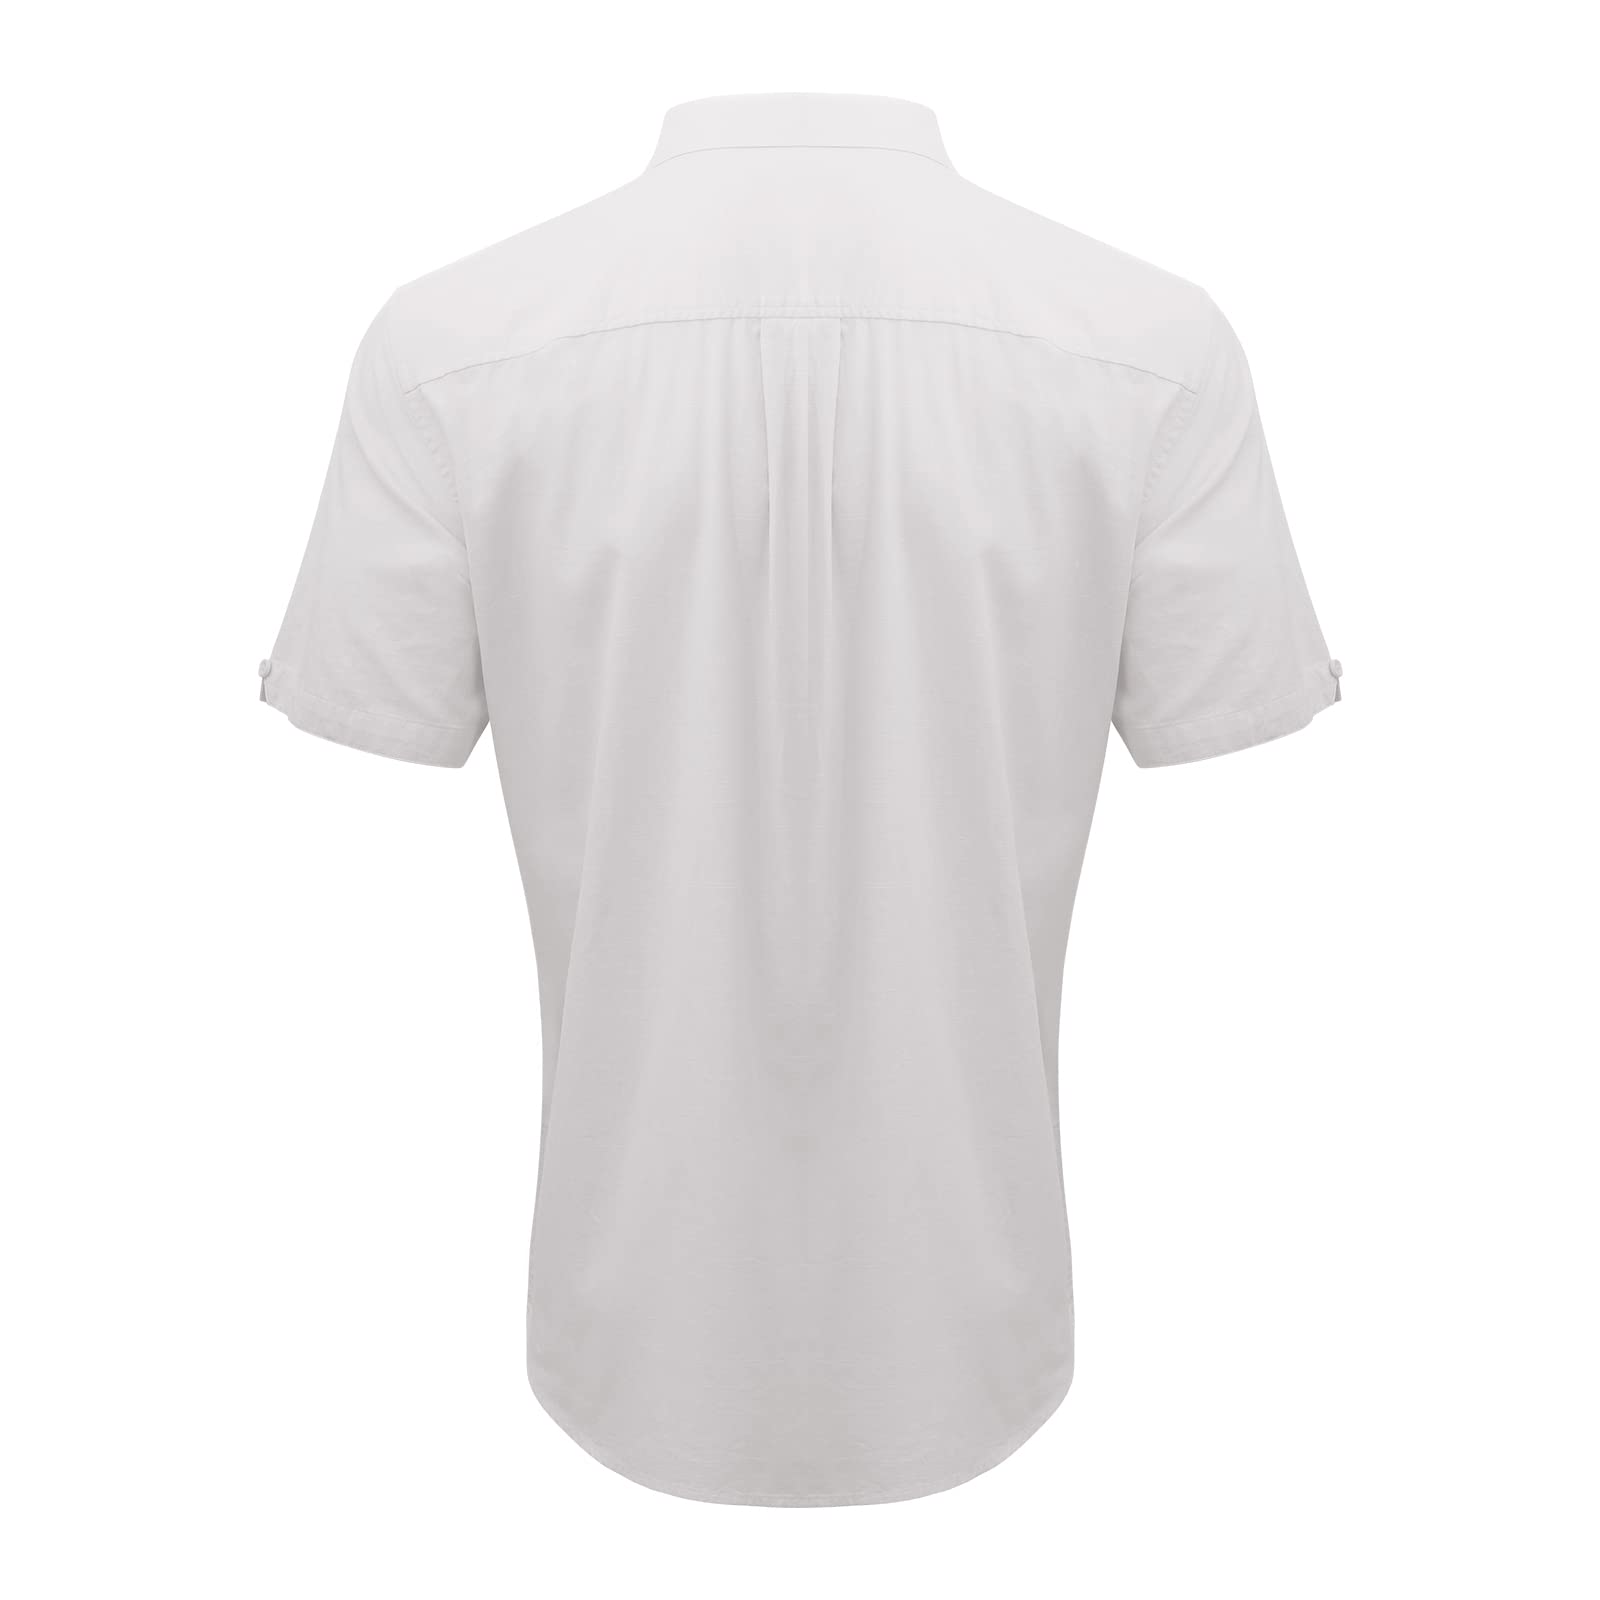 Men's Casual Summer Button Down Linen Shirts Short Sleeve Cotton Beach Tops with Pocket